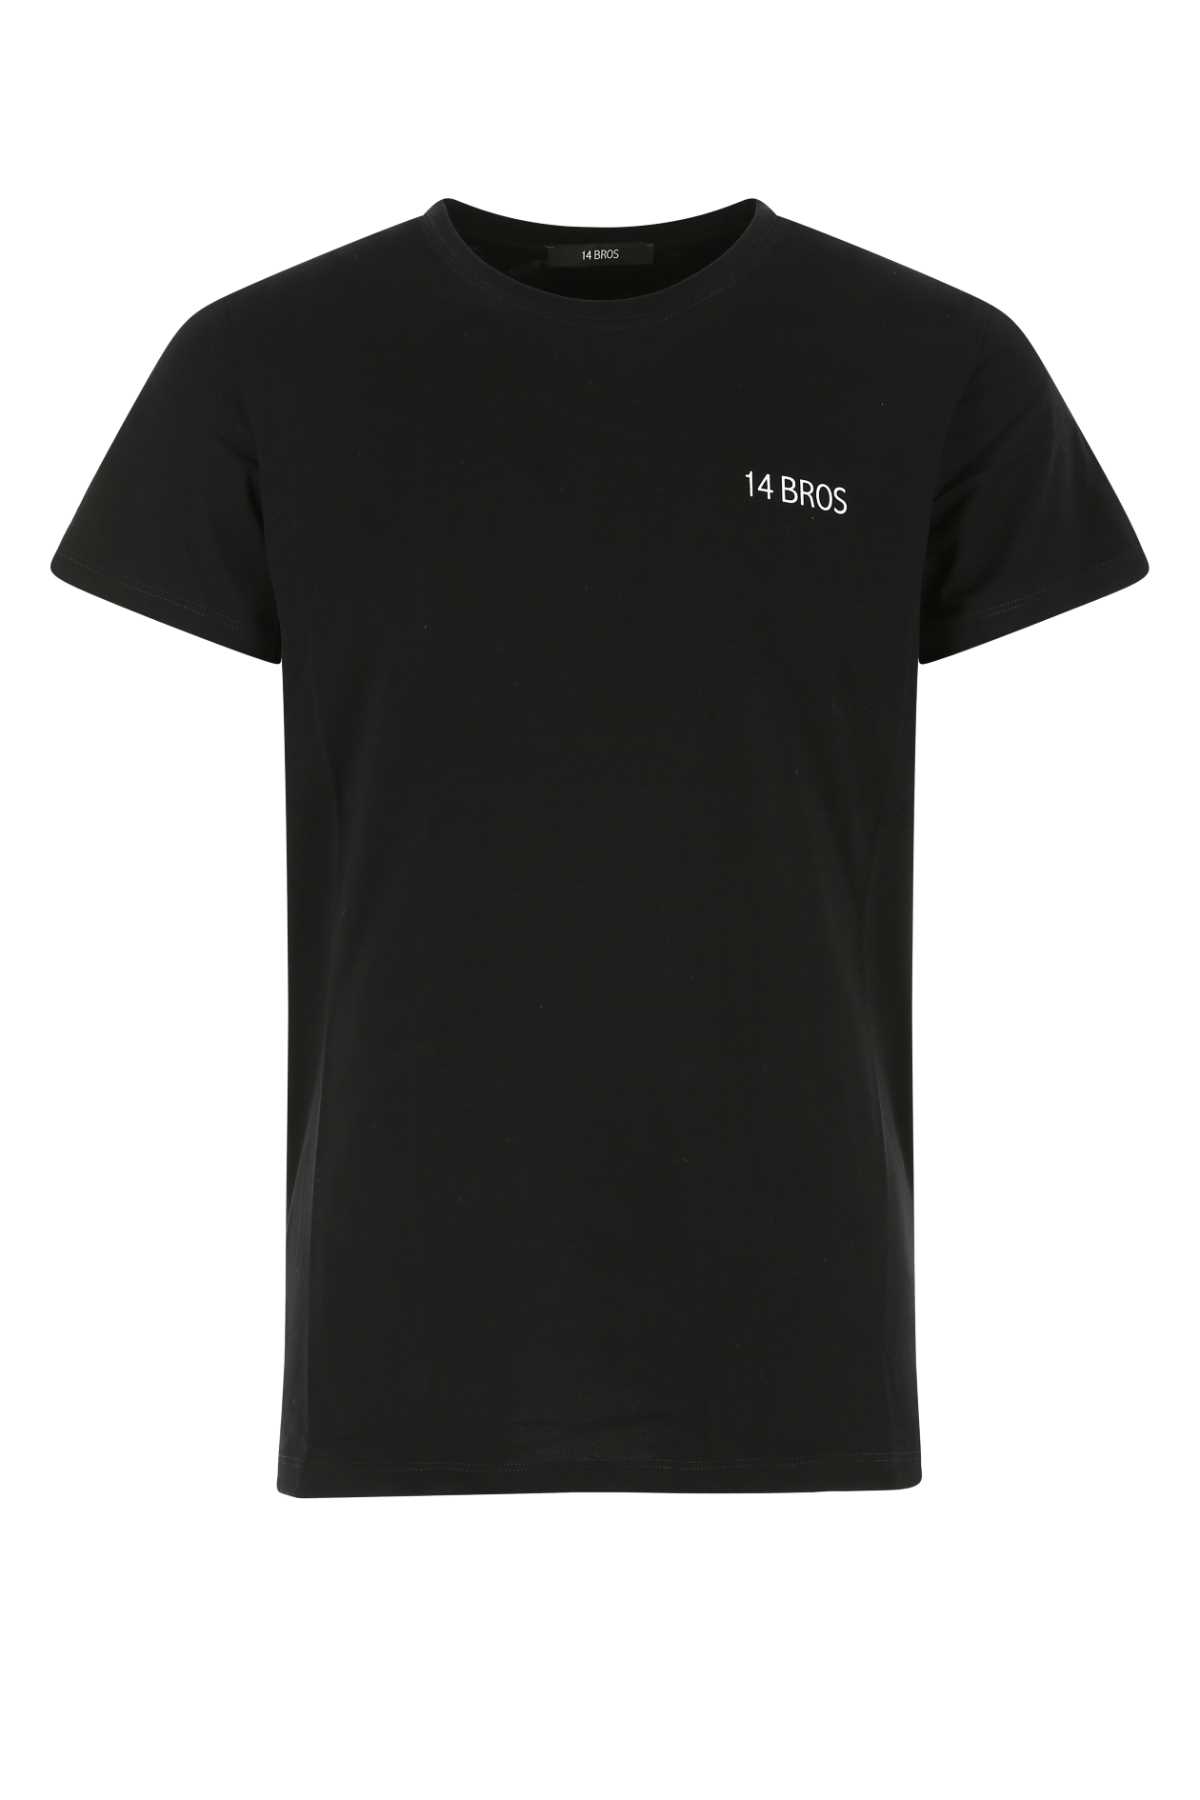 14 Bros Black Cotton T-shirt